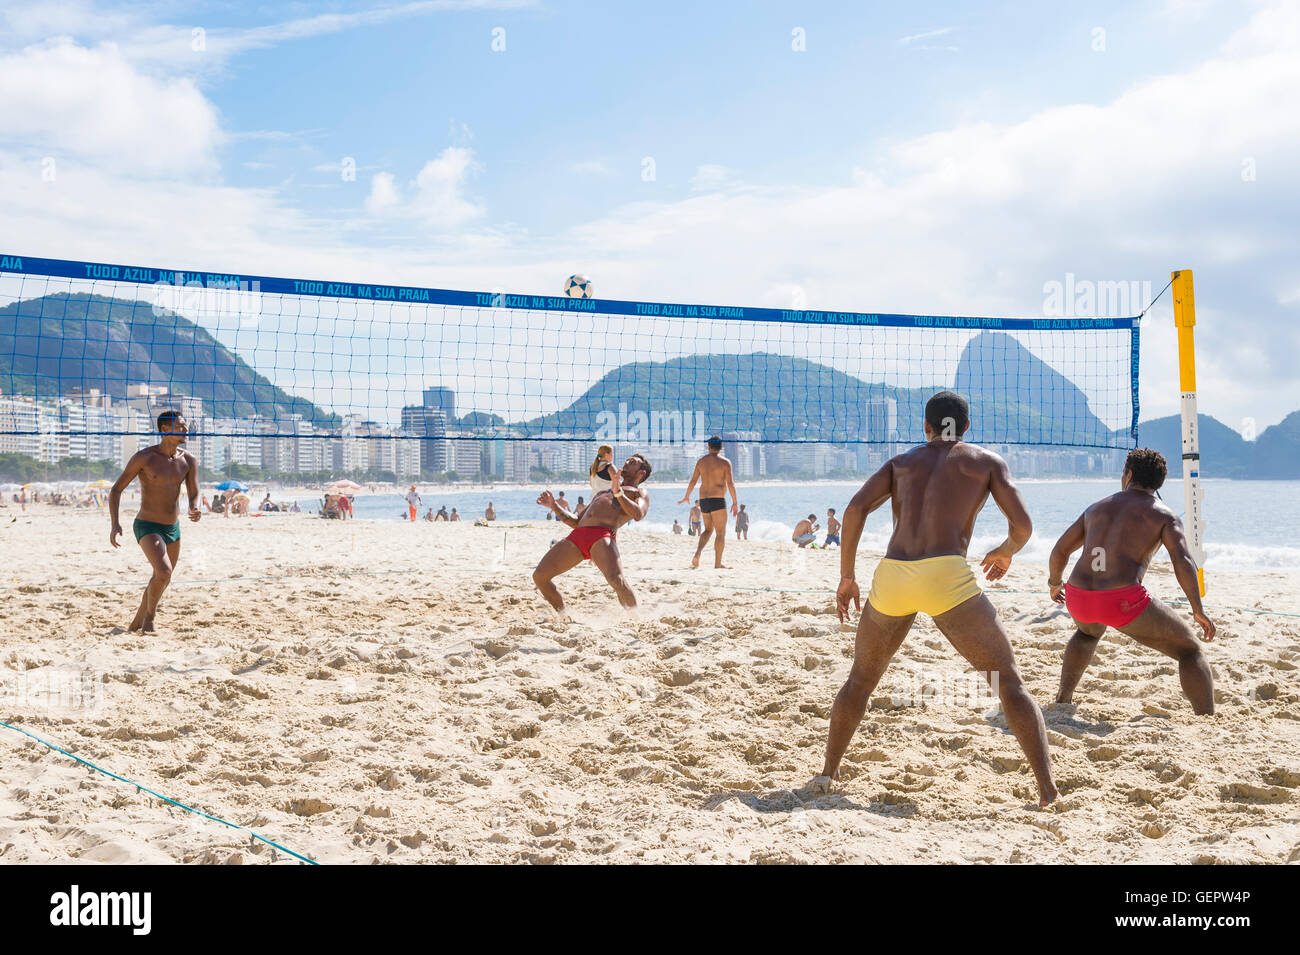 RIO DE JANEIRO - MARCH 15, 2016: Brazilian men play a game of futevôlei (footvolley, a sport combining football and volleyball). Stock Photo